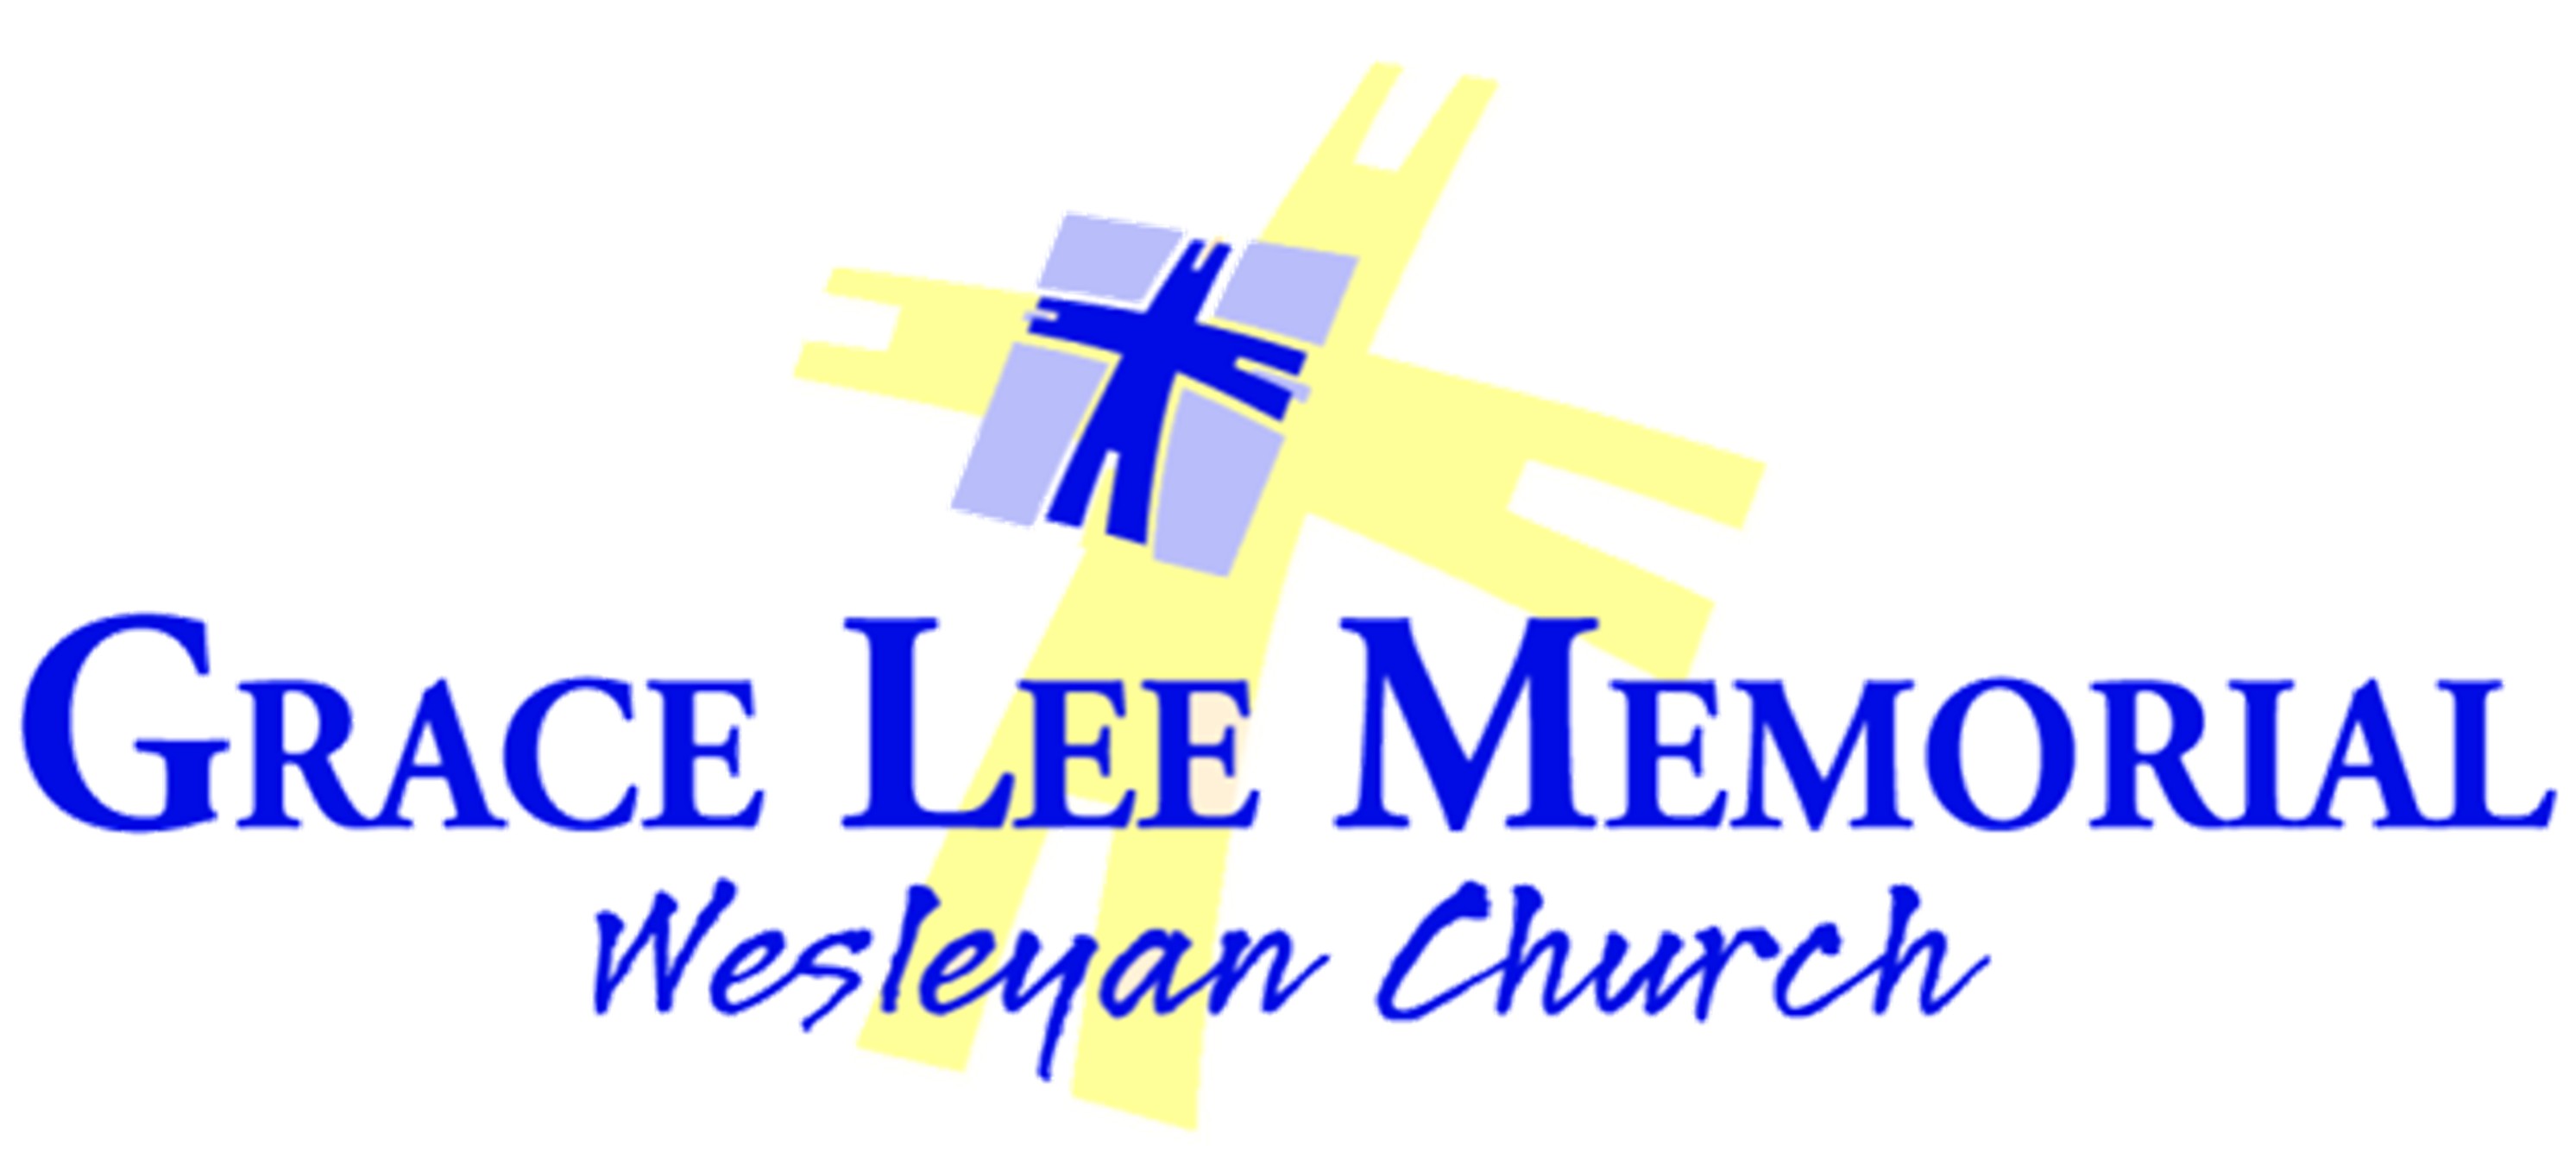 Grace Lee Memorial Wesleyan Church